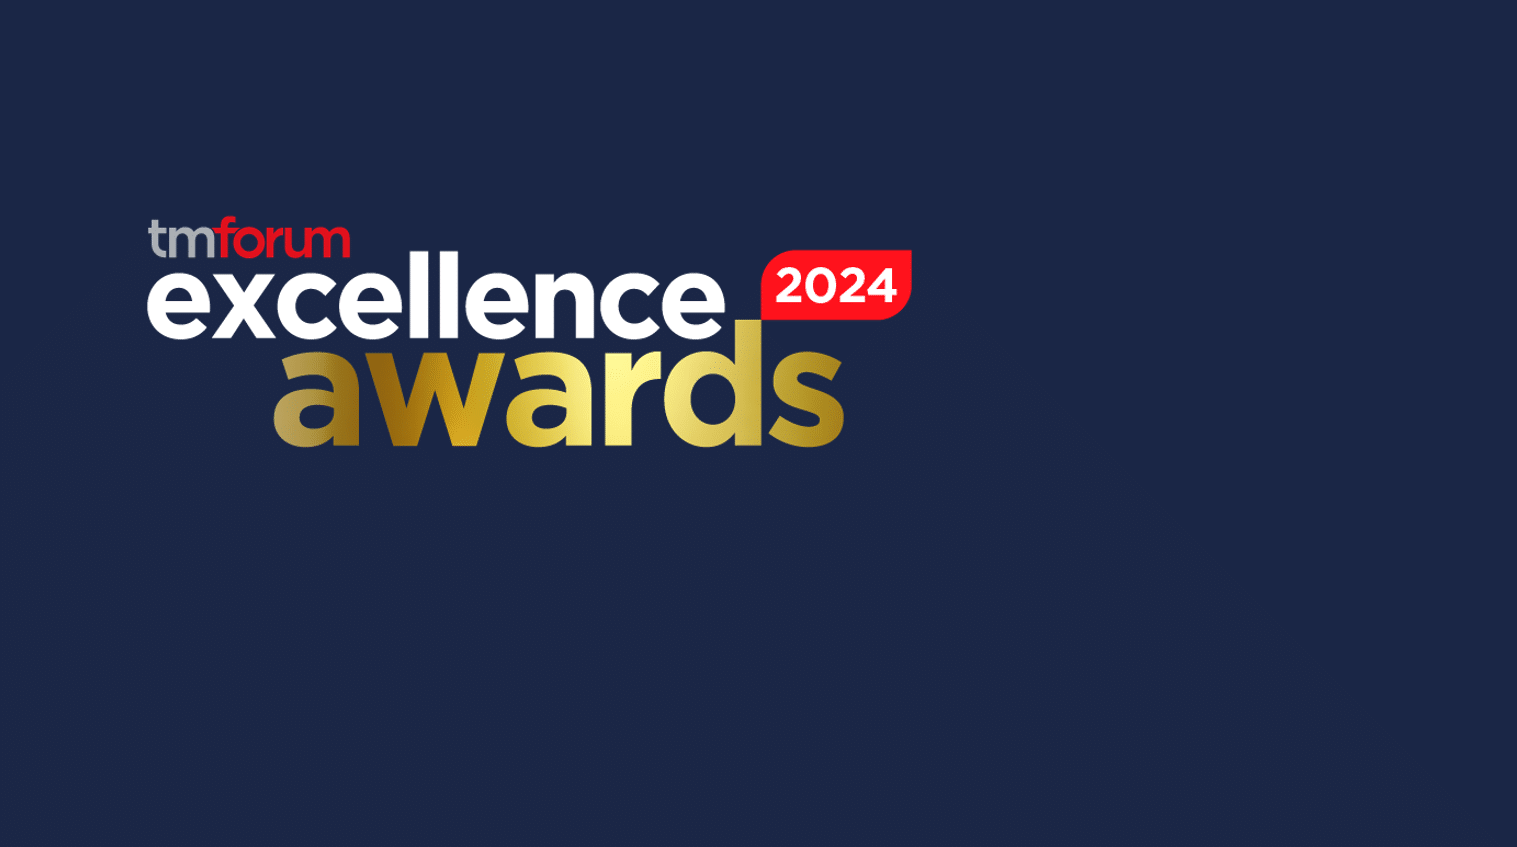 TMForum excellence awards 2024